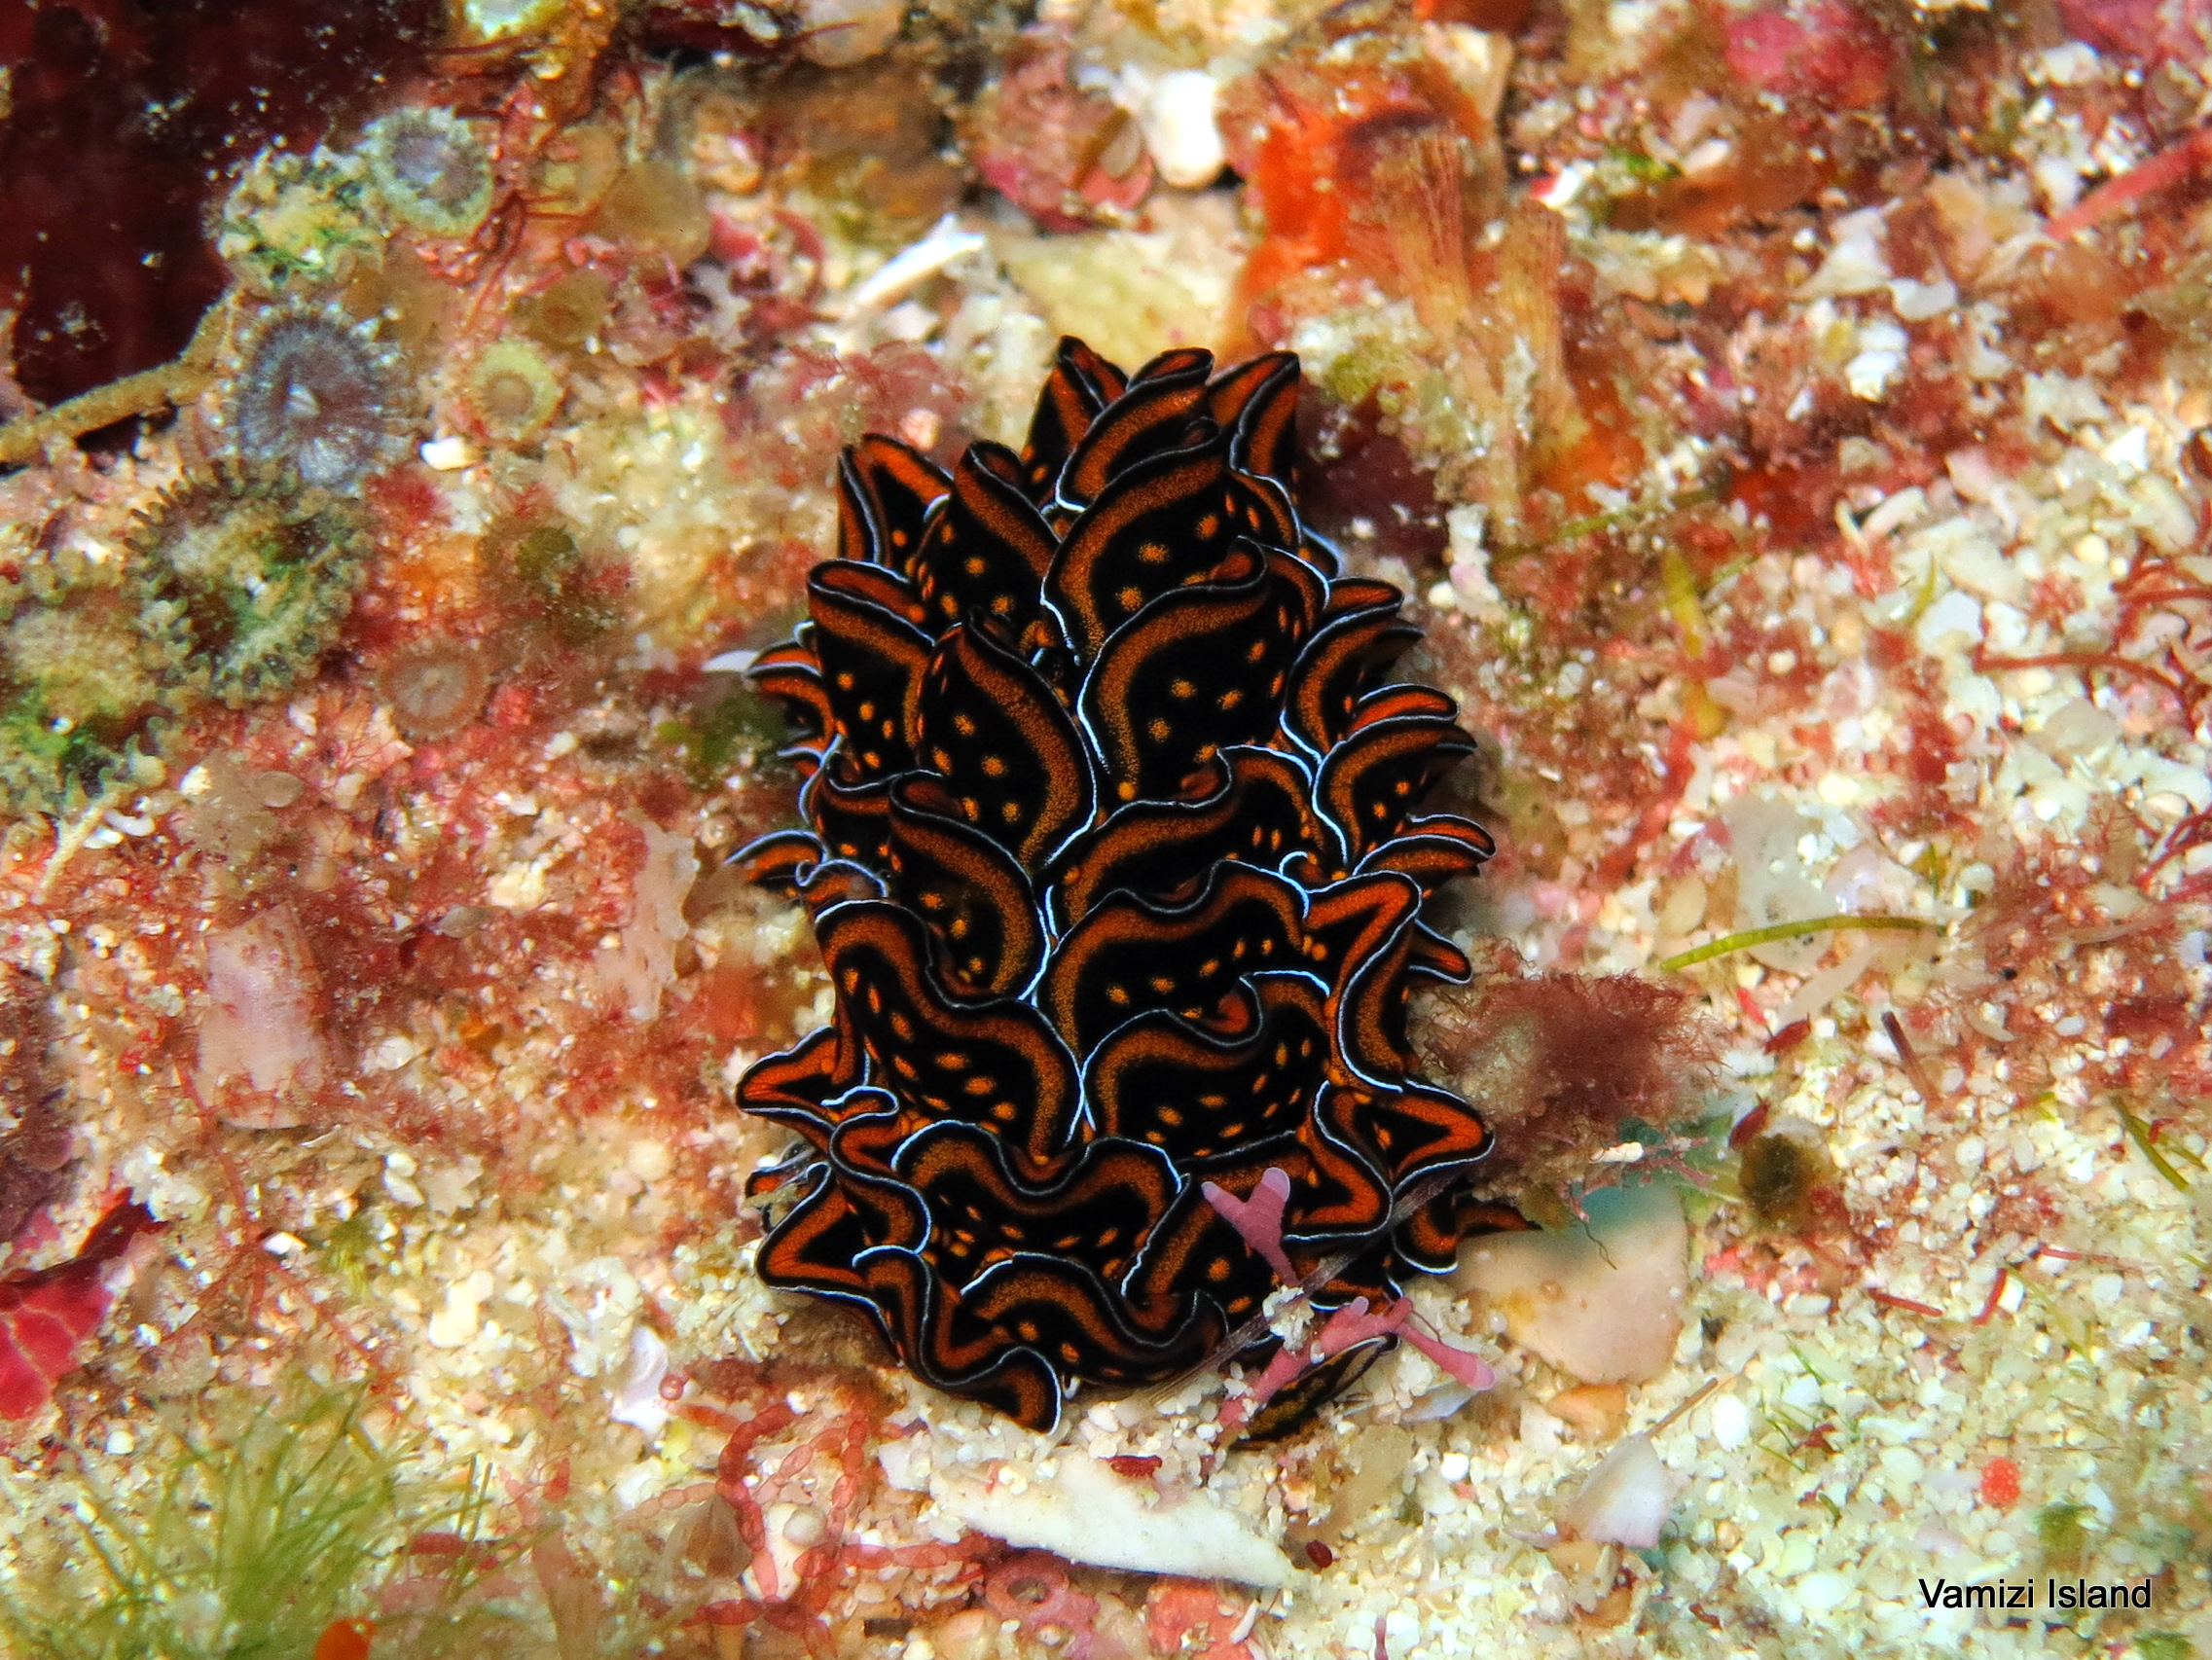 Vamizi_IndianOcean_sea slugs